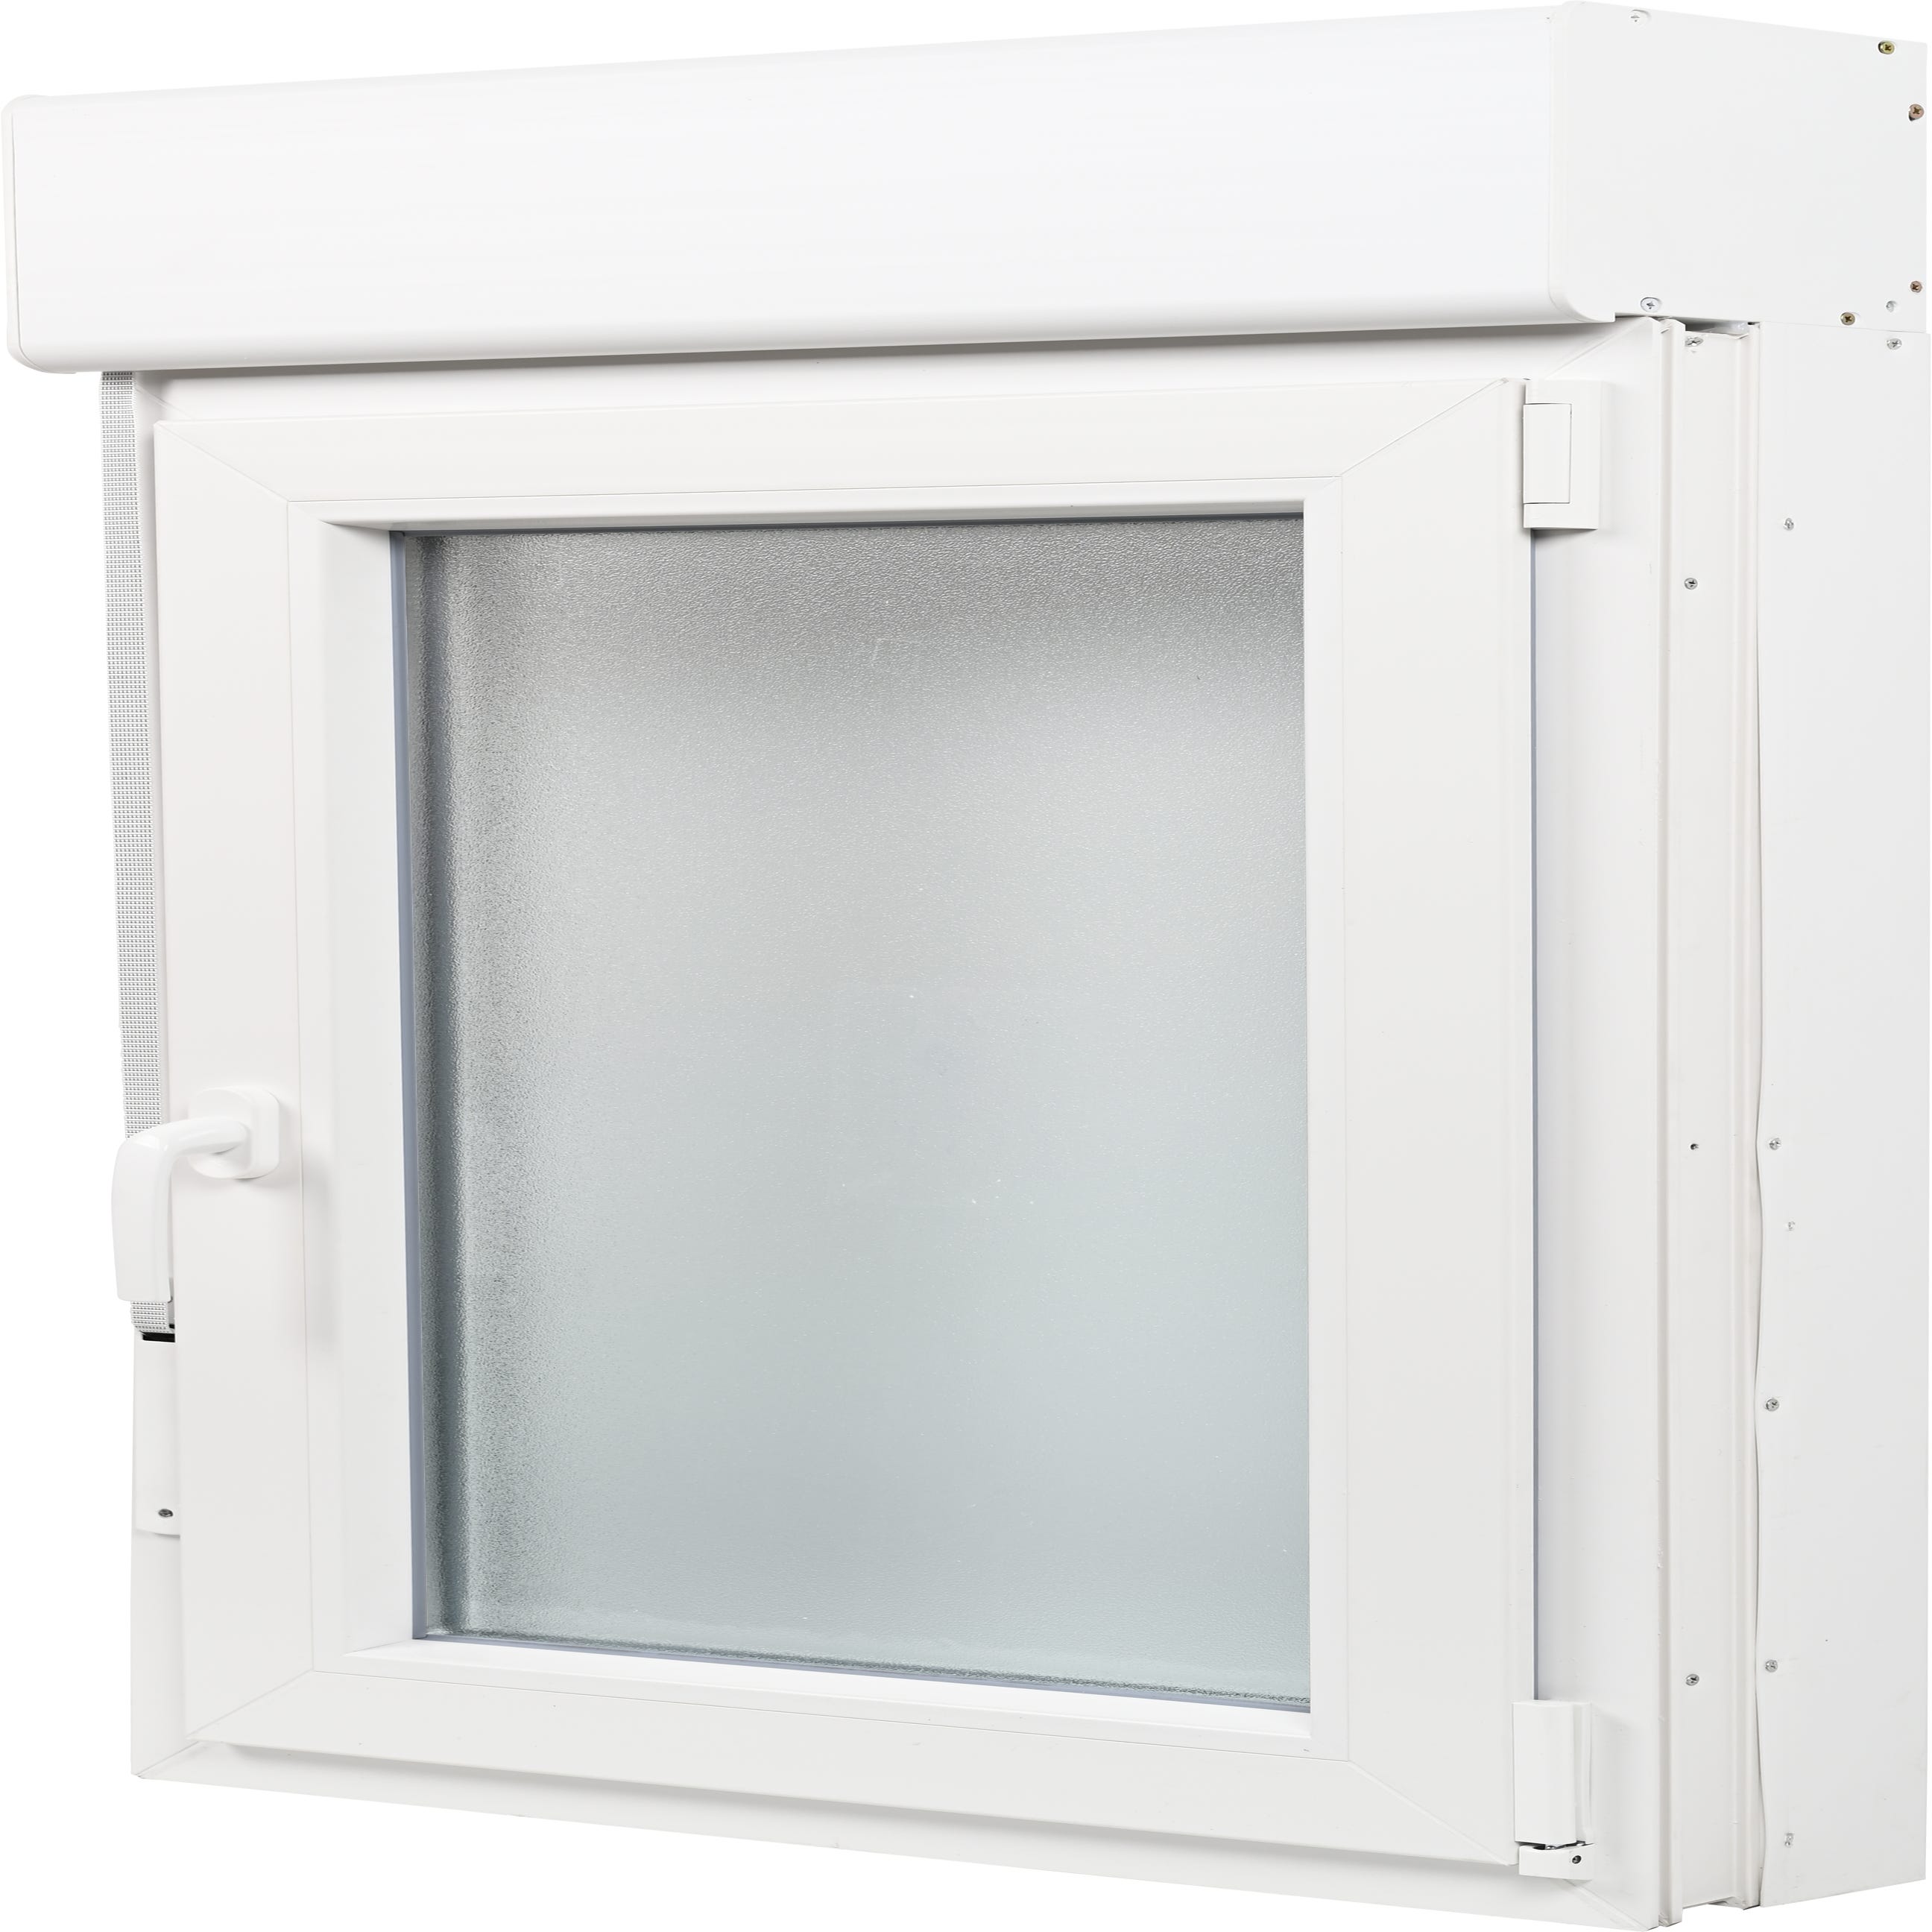 Balconera PVC ARTENS blanca oscilobatiente con persiana 85X229 cm